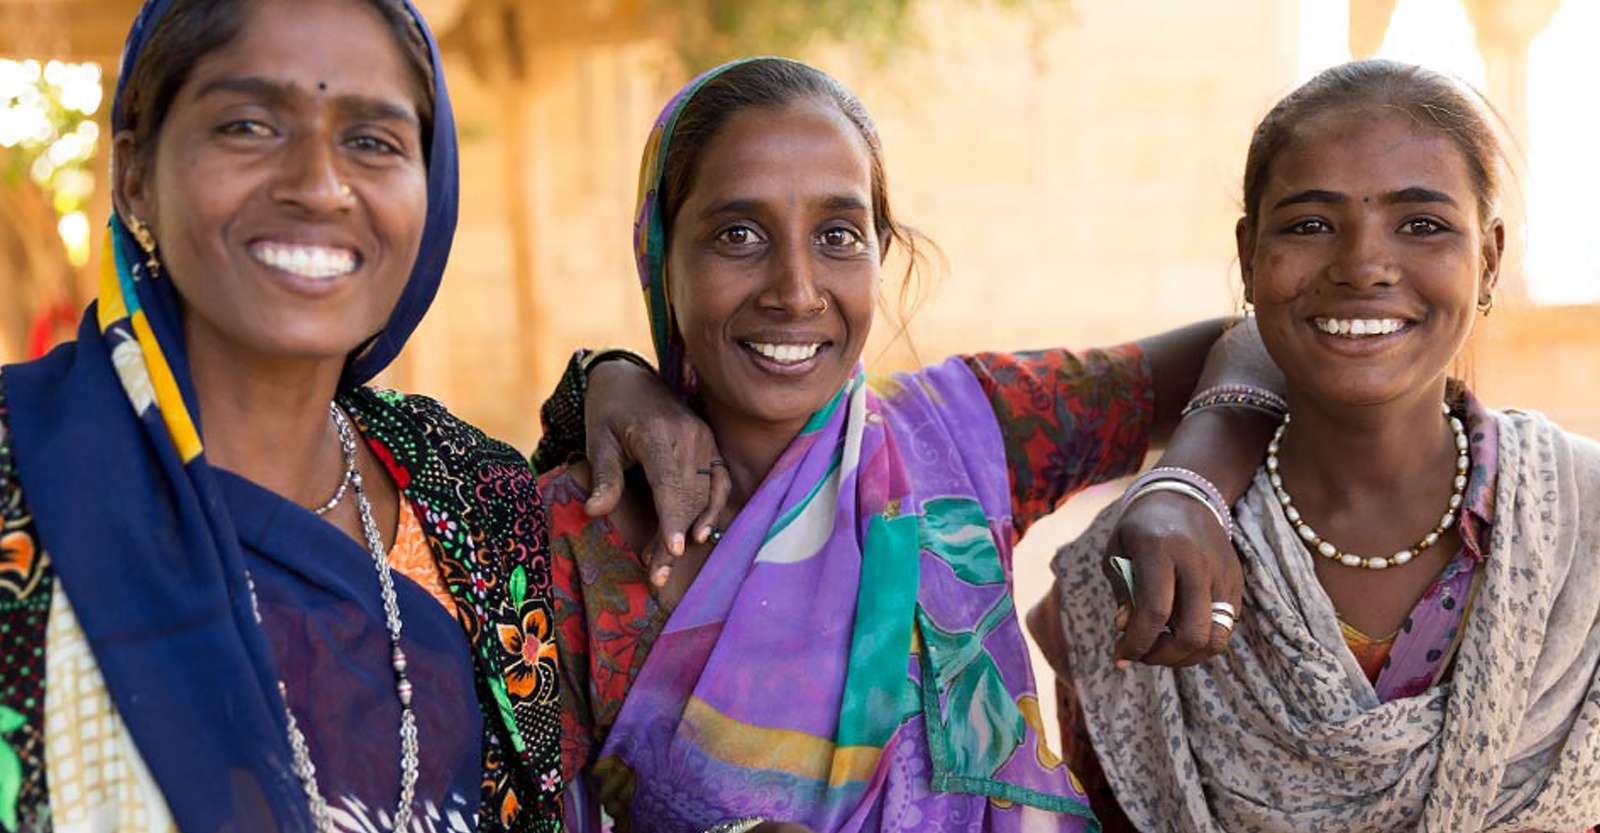 Local women, Rajasthan, India.